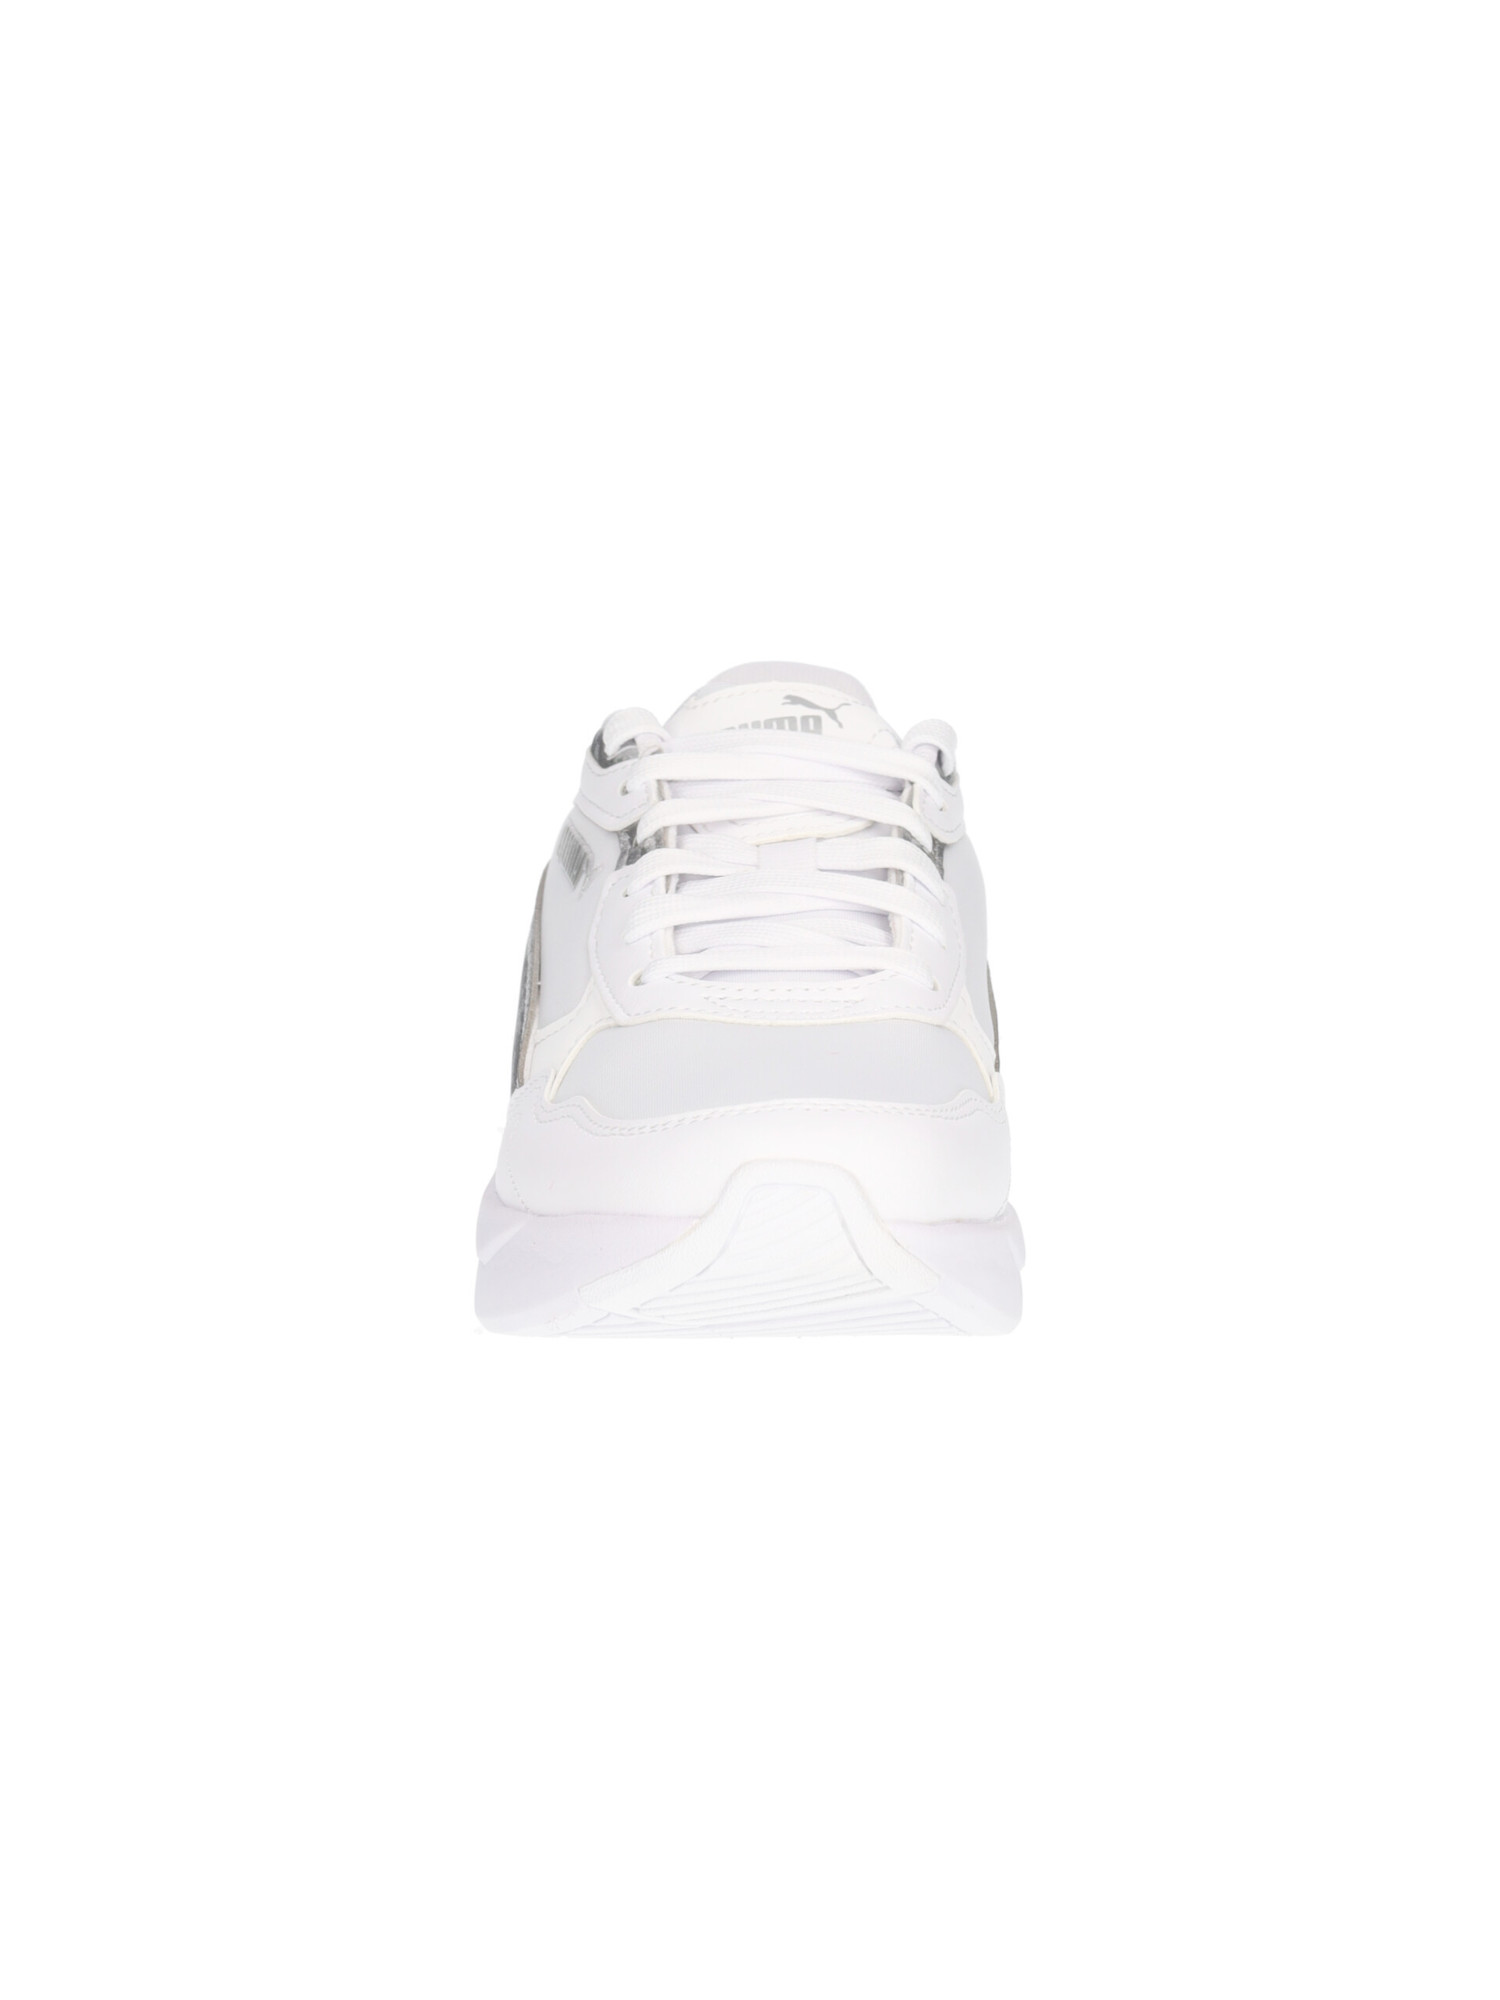 sneaker-puma-x-ray-speed-da-donna-bianca-58e336